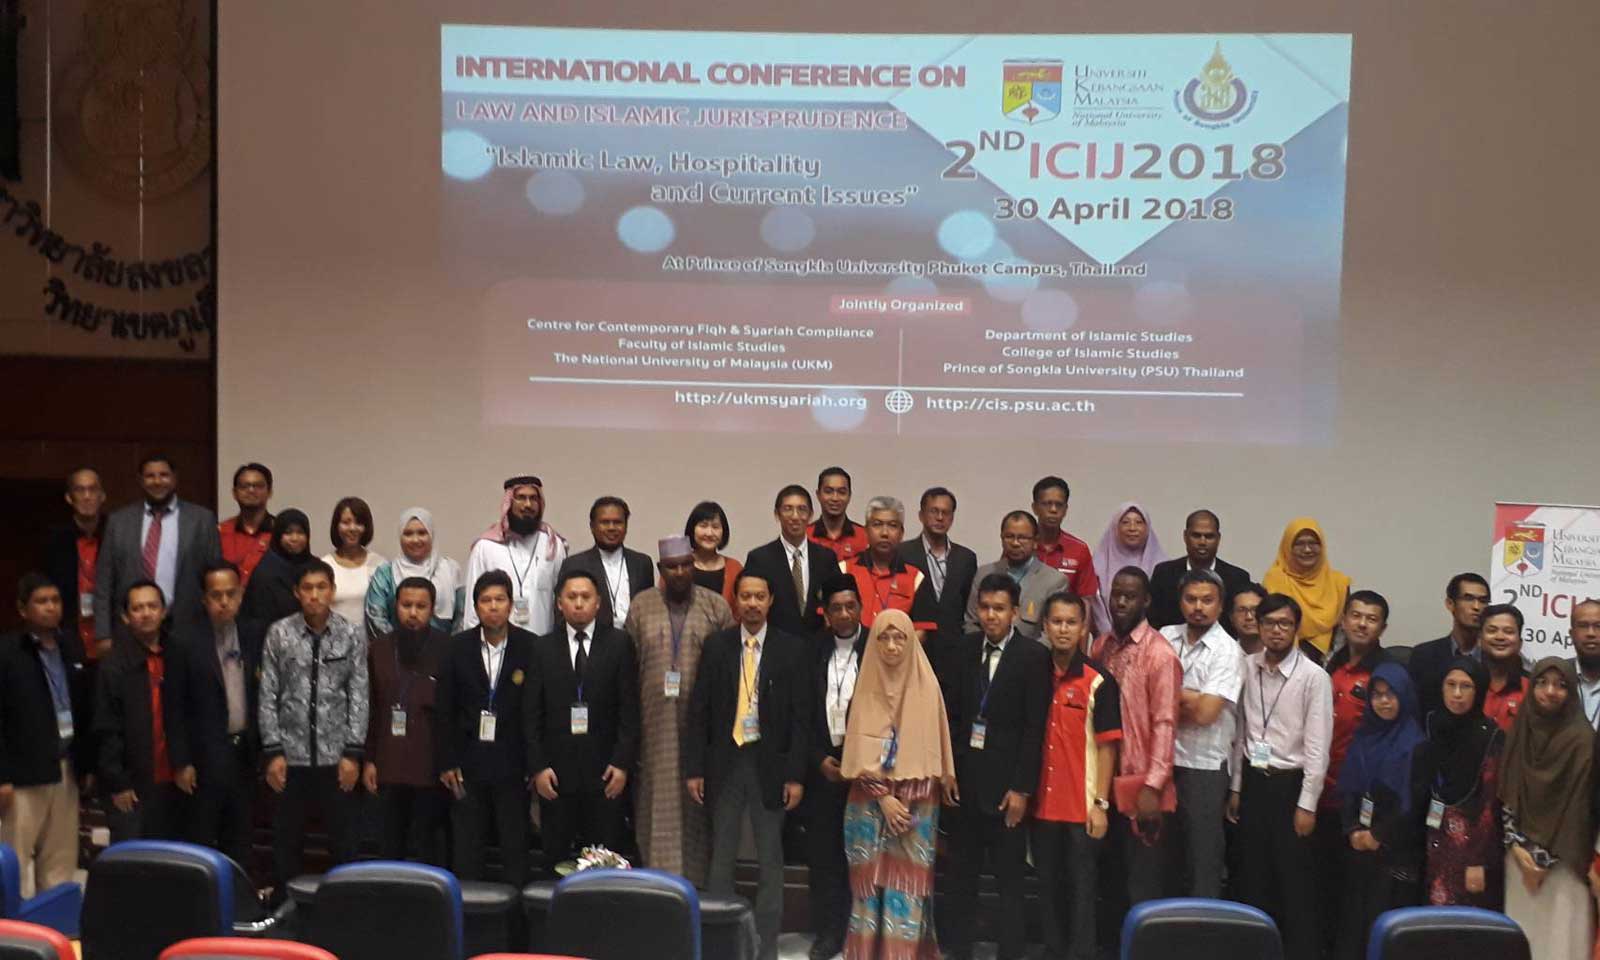 Foto Bersama Peserta “2nd International Conference on Law and Islamic Jurisprudence 2018” di Prince of Songkla University, Phuket, Thailand